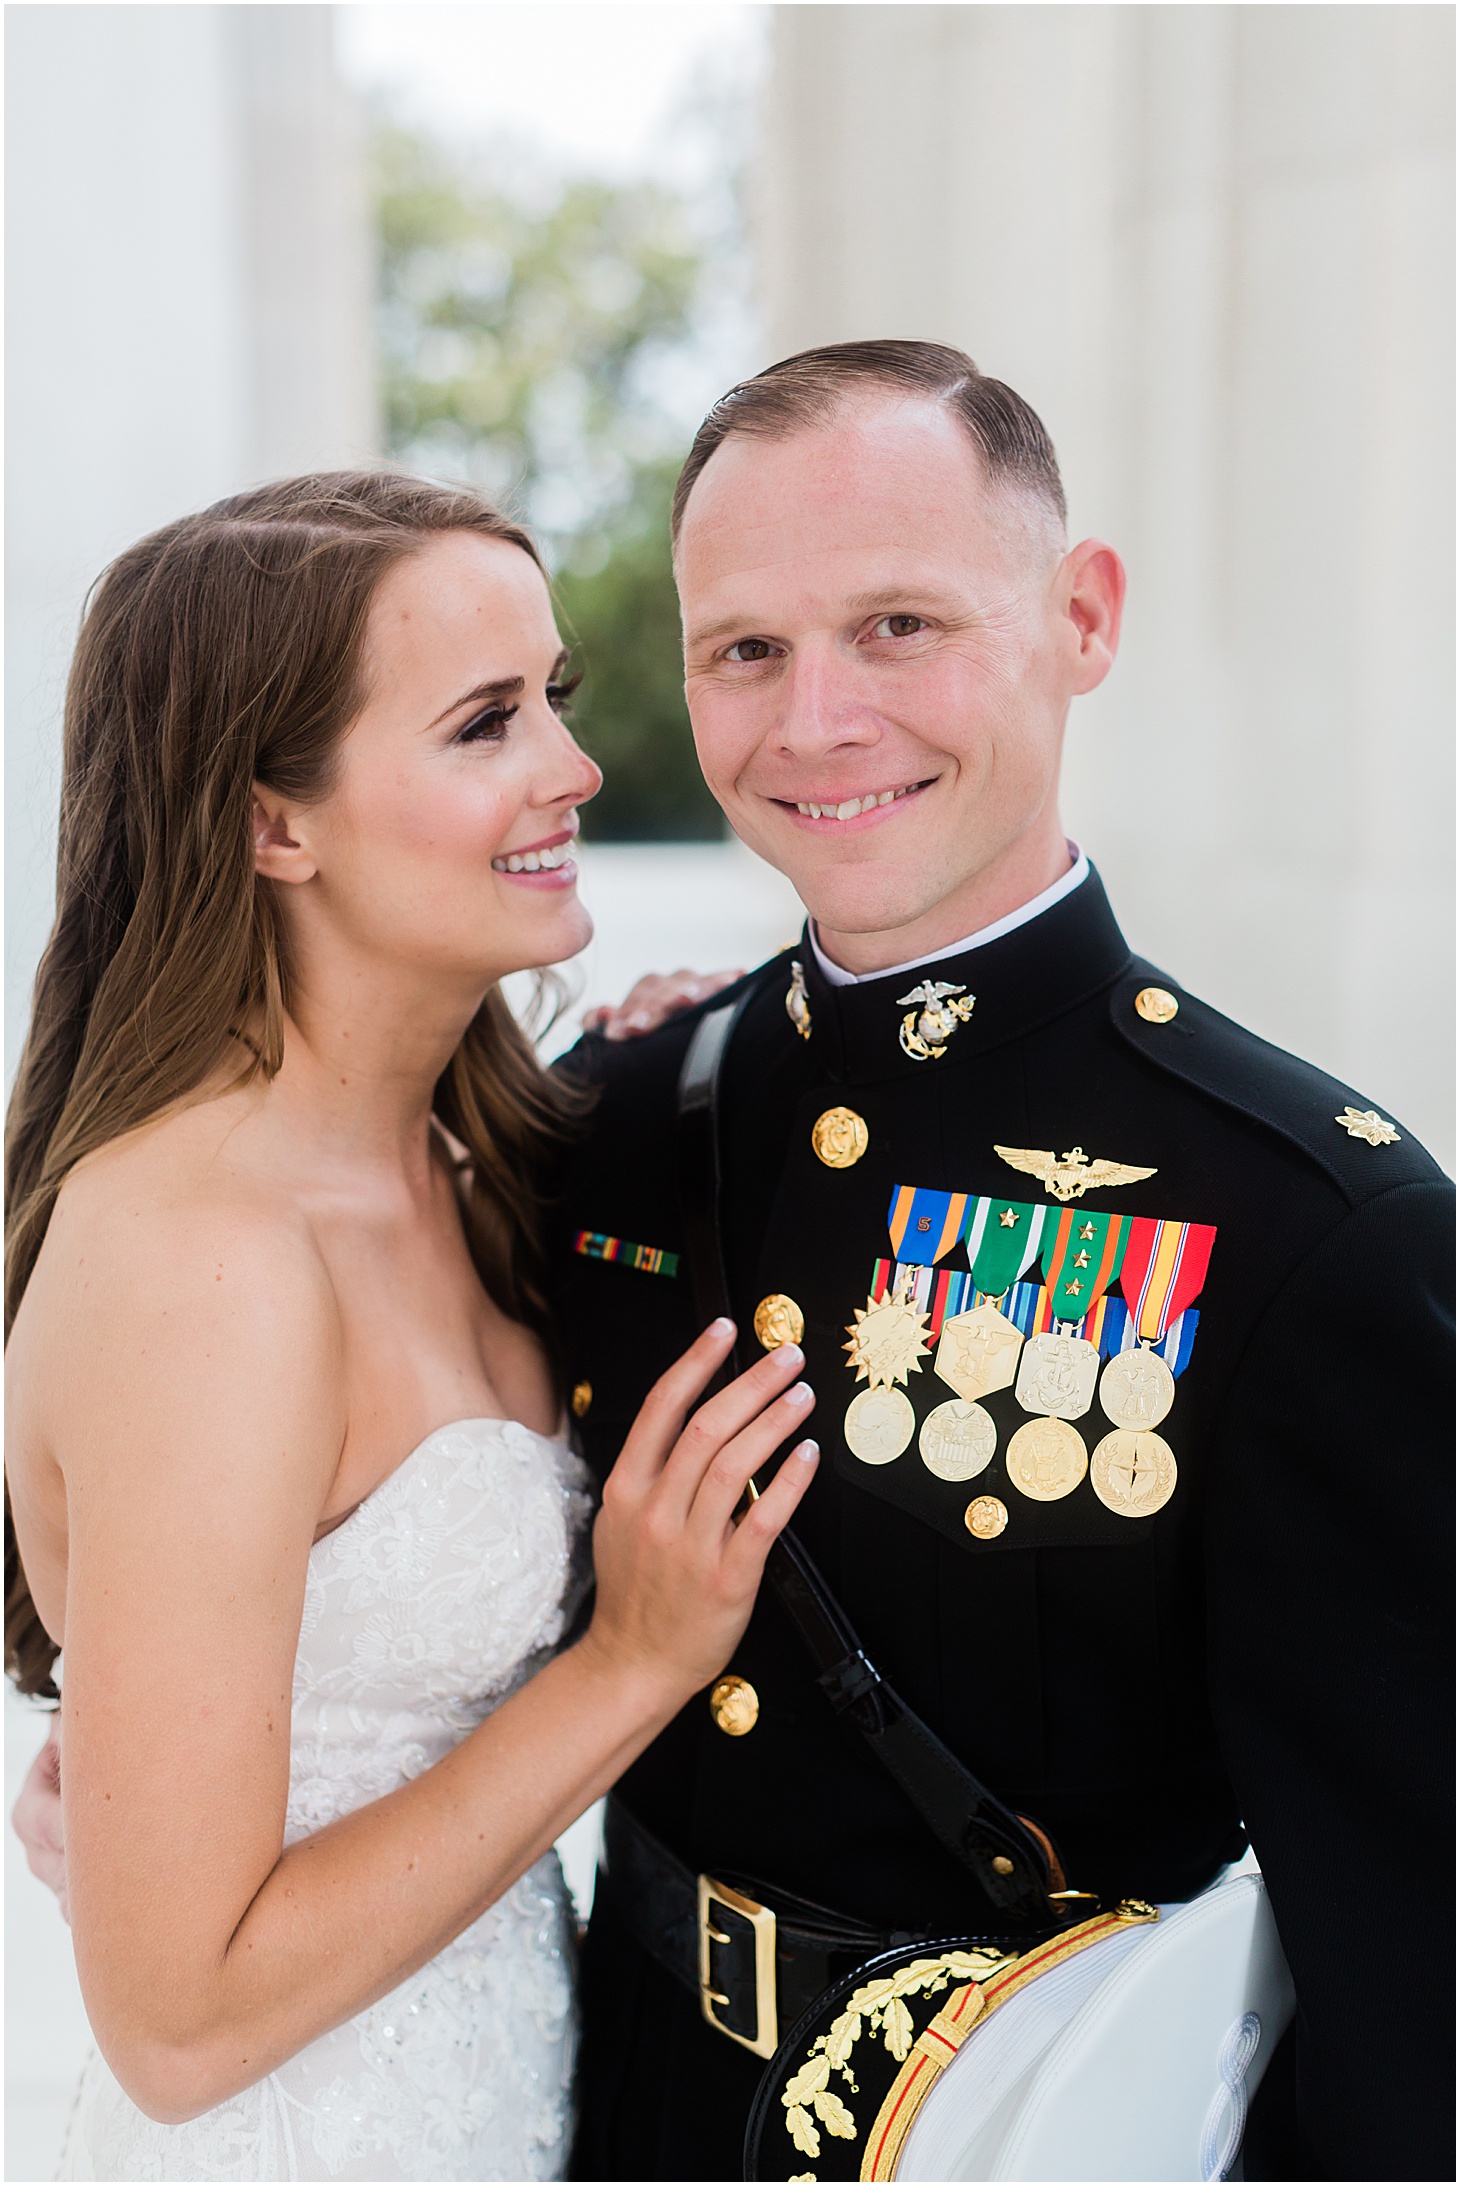 Spring Wedding Portraits at Lincoln Memorial, Intimate Military Wedding at DC War Memorial, Sarah Bradshaw Photography, DC Wedding Photographer